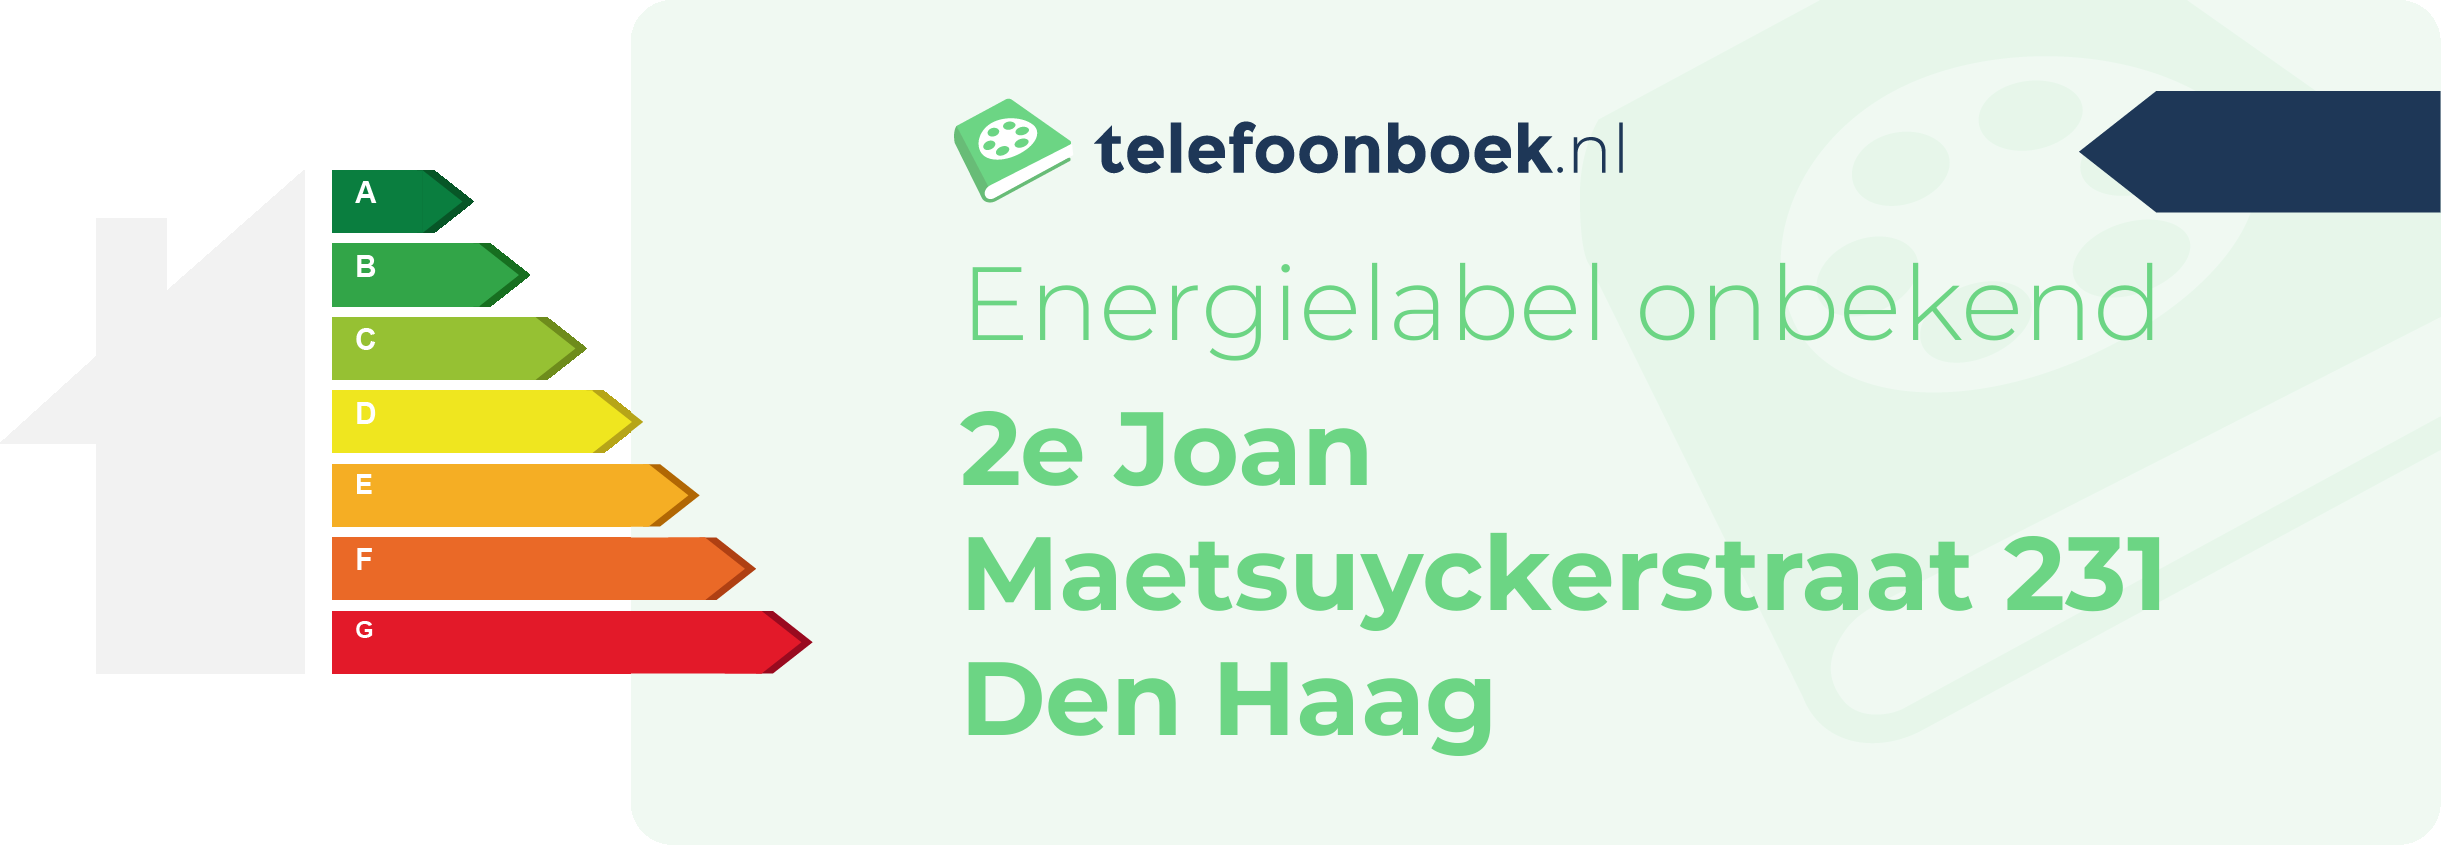 Energielabel 2e Joan Maetsuyckerstraat 231 Den Haag